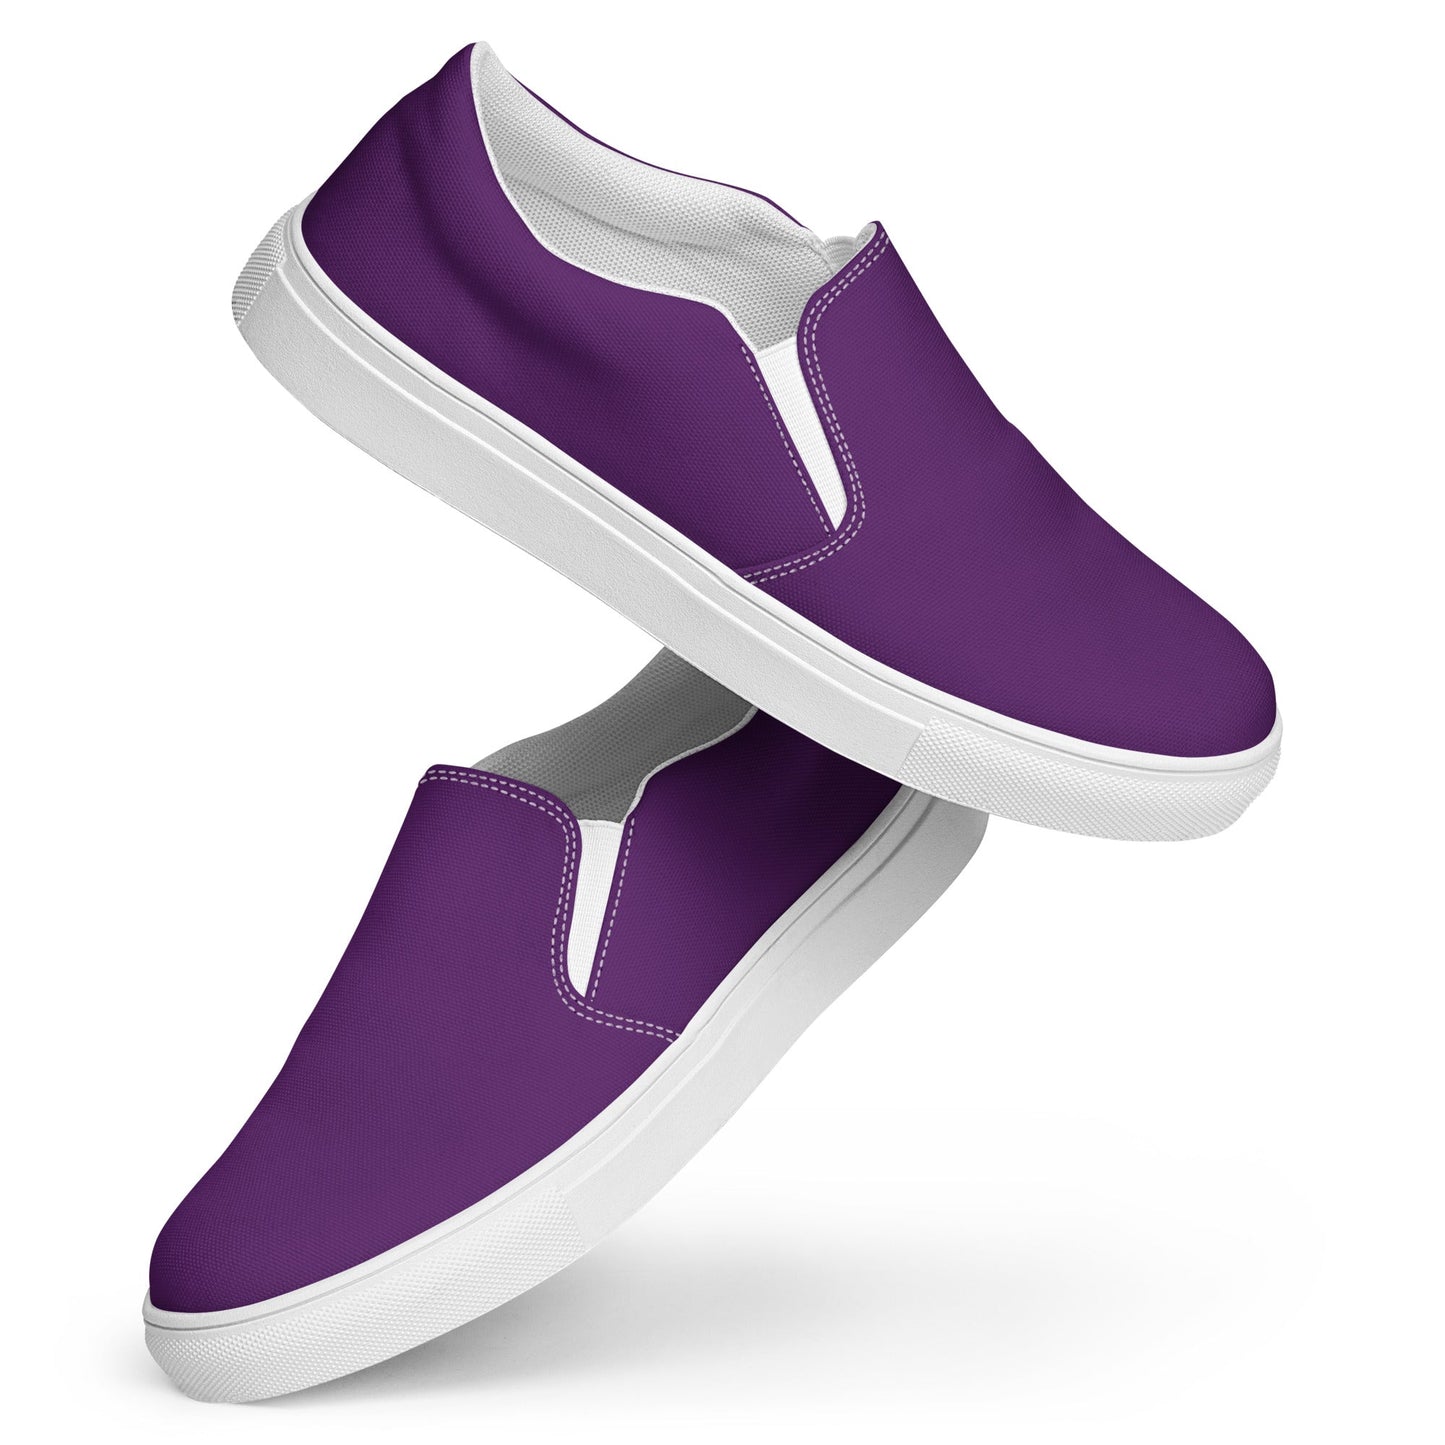 klasneakers Men’s slip-on canvas shoes - Royal Purple